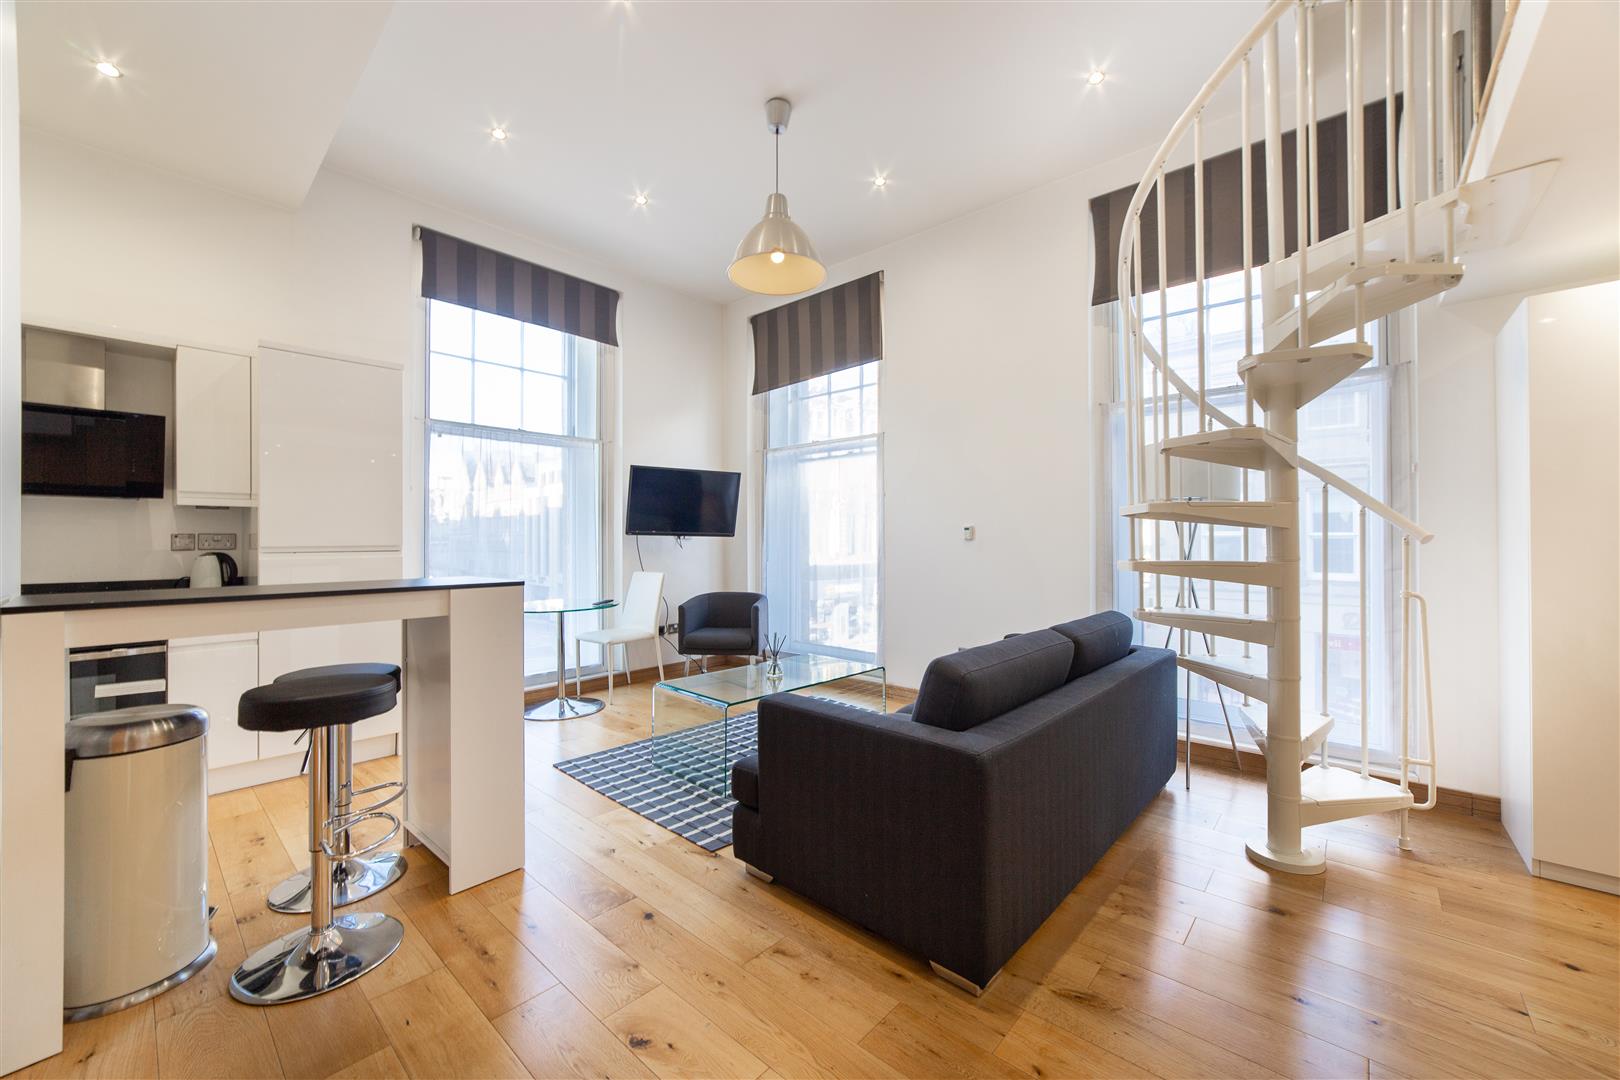 1 bed studio flat to rent in Grainger Street, City Centre - Property Image 1